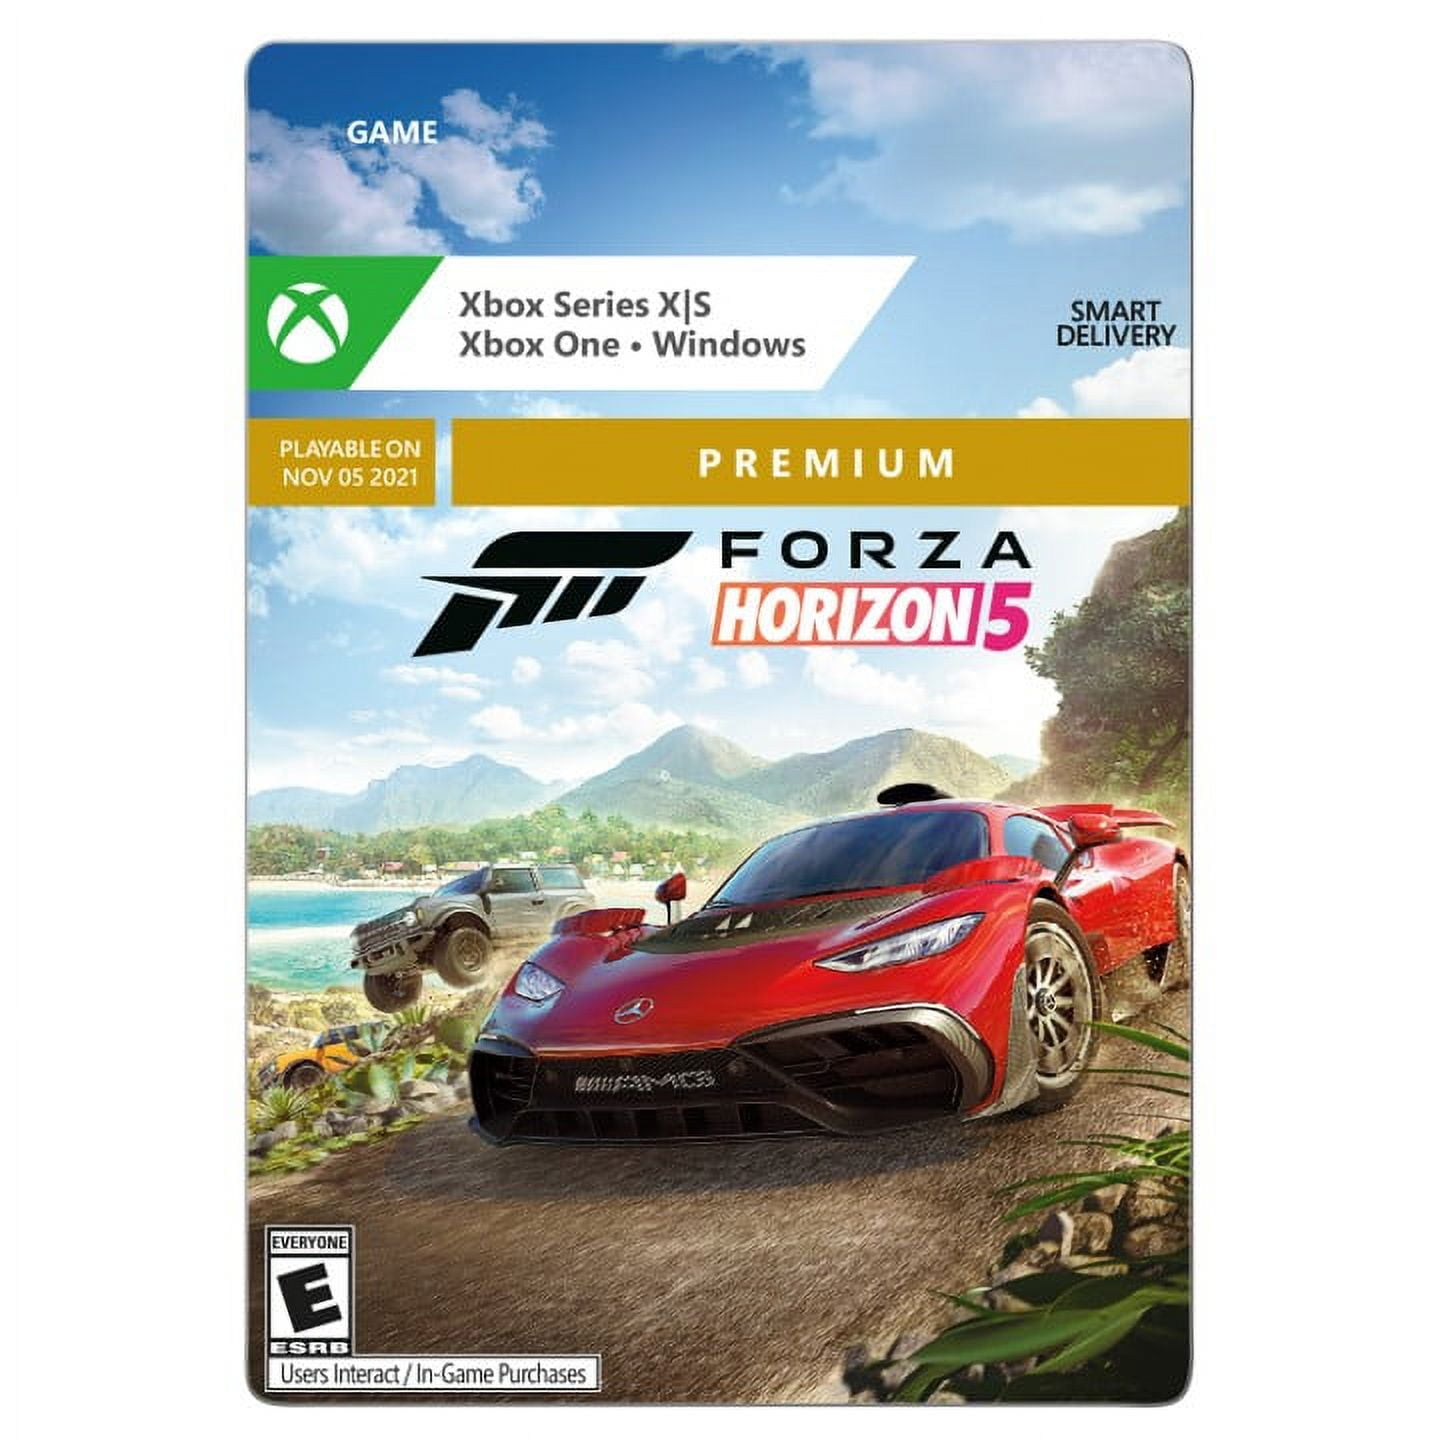 Forza Motorsport: Premium Edition - Xbox Series X/S and Windows